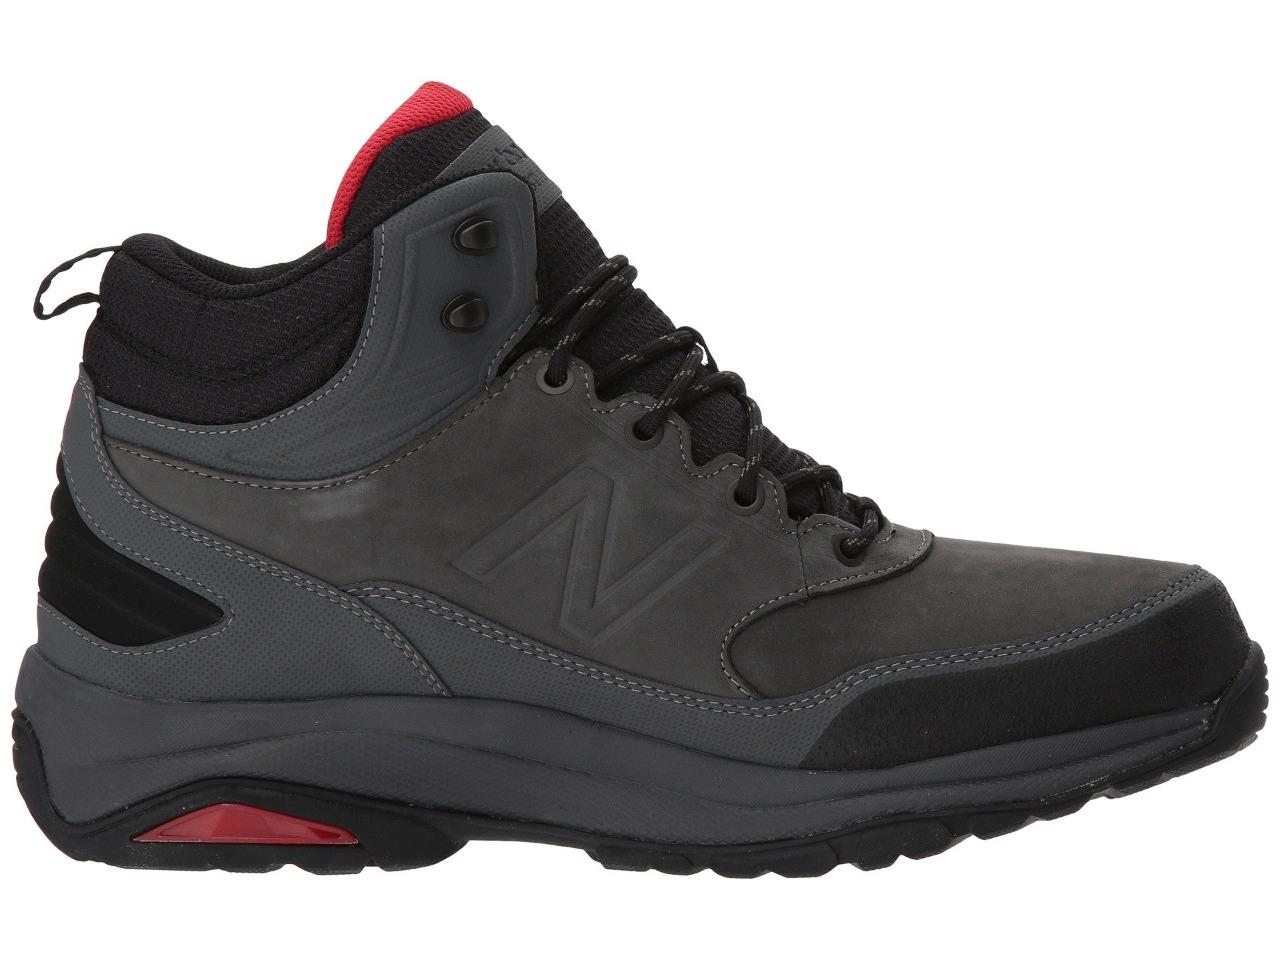 New Balance MW1400GR 1400v1 Waterproof Hiking Boots Men's Size 10-11.5 Narrow | eBay